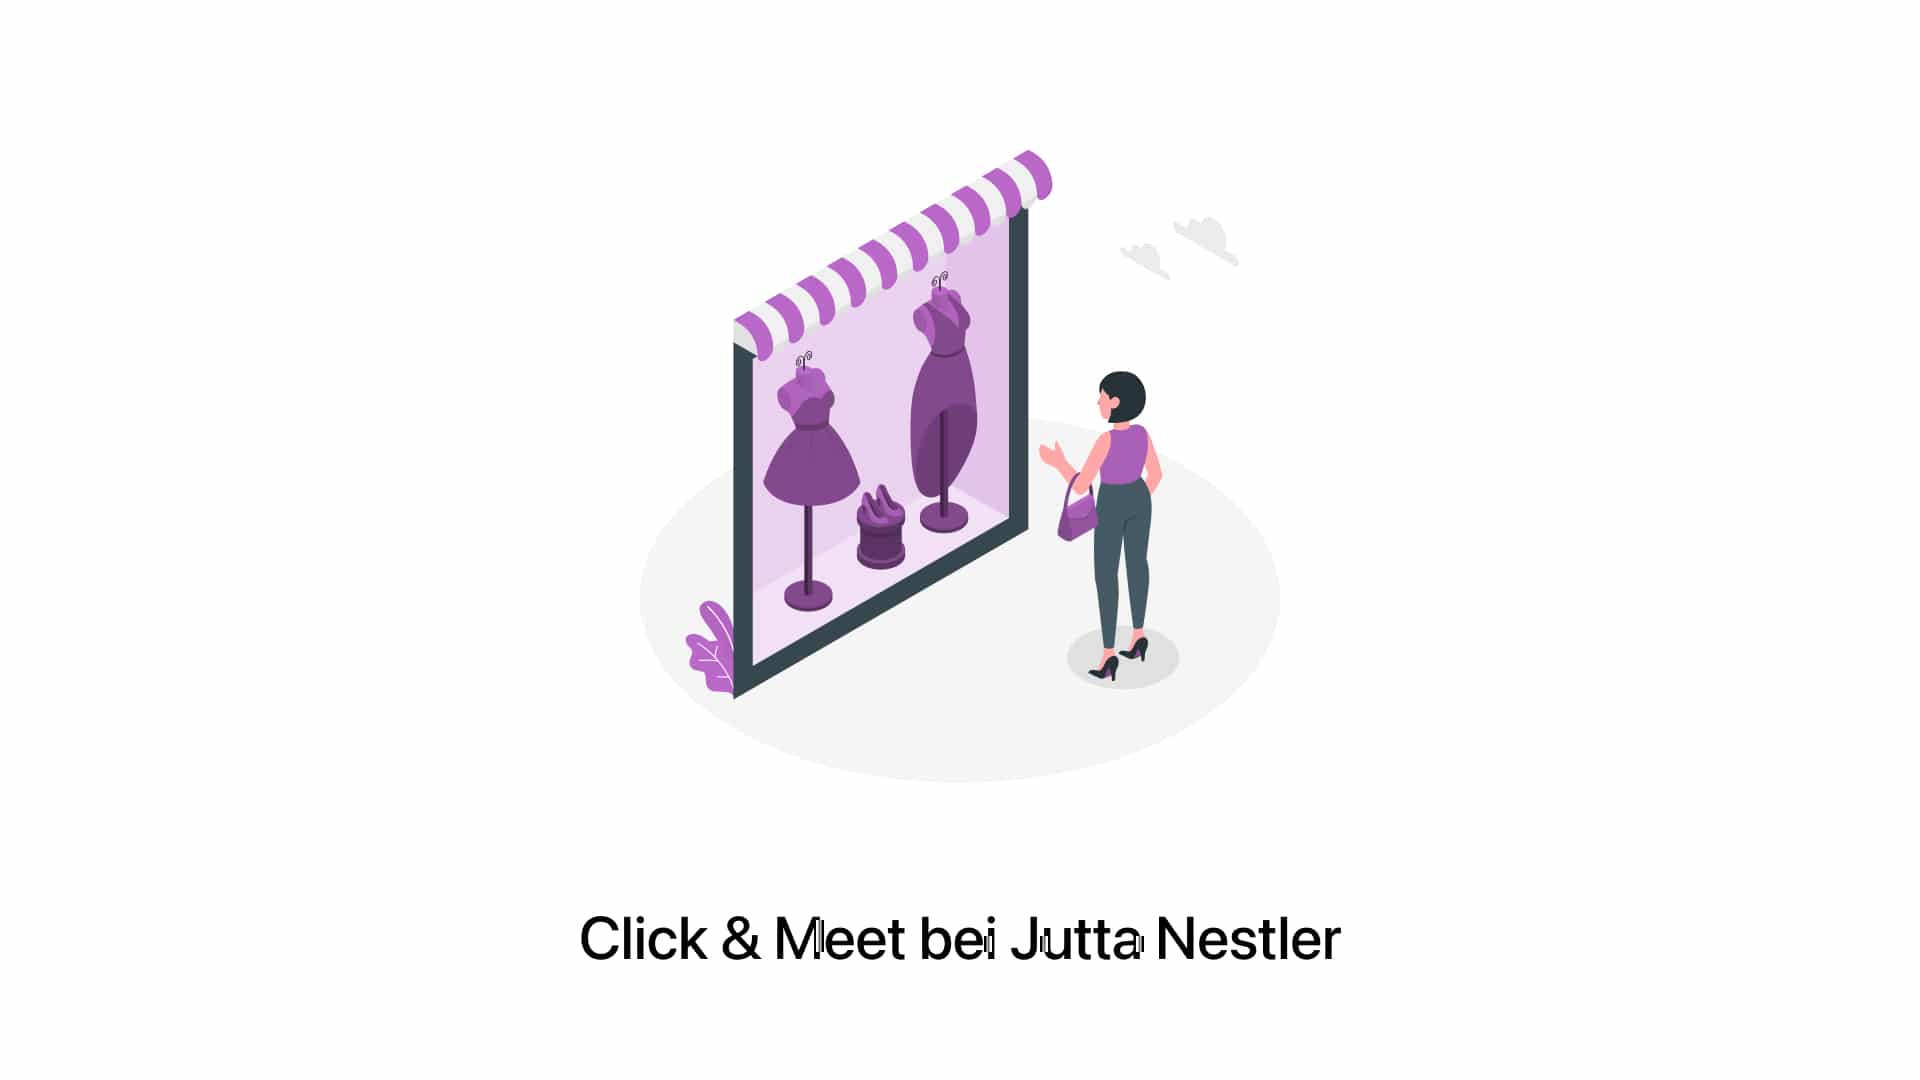 Click & Meet jetzt auch bei Jutta Nestler ganz einfach